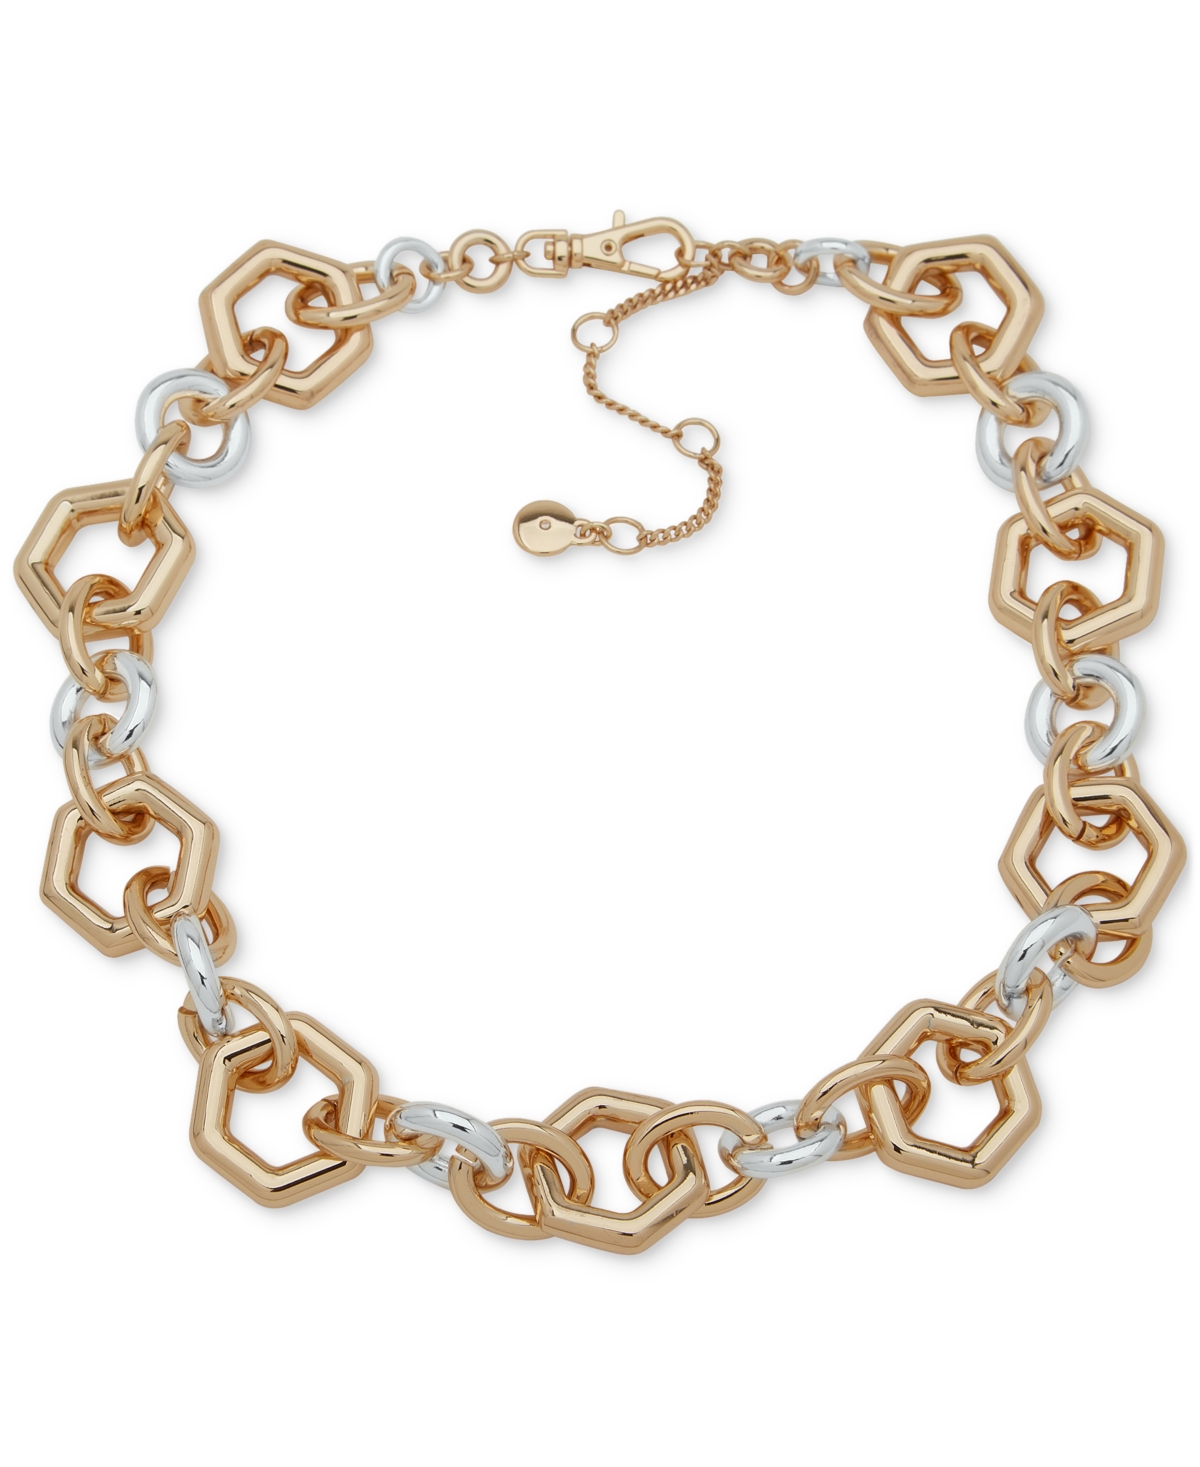 Two-Tone Circle & Hexagon Link Collar Necklace, 16" + 3" extender - Gold